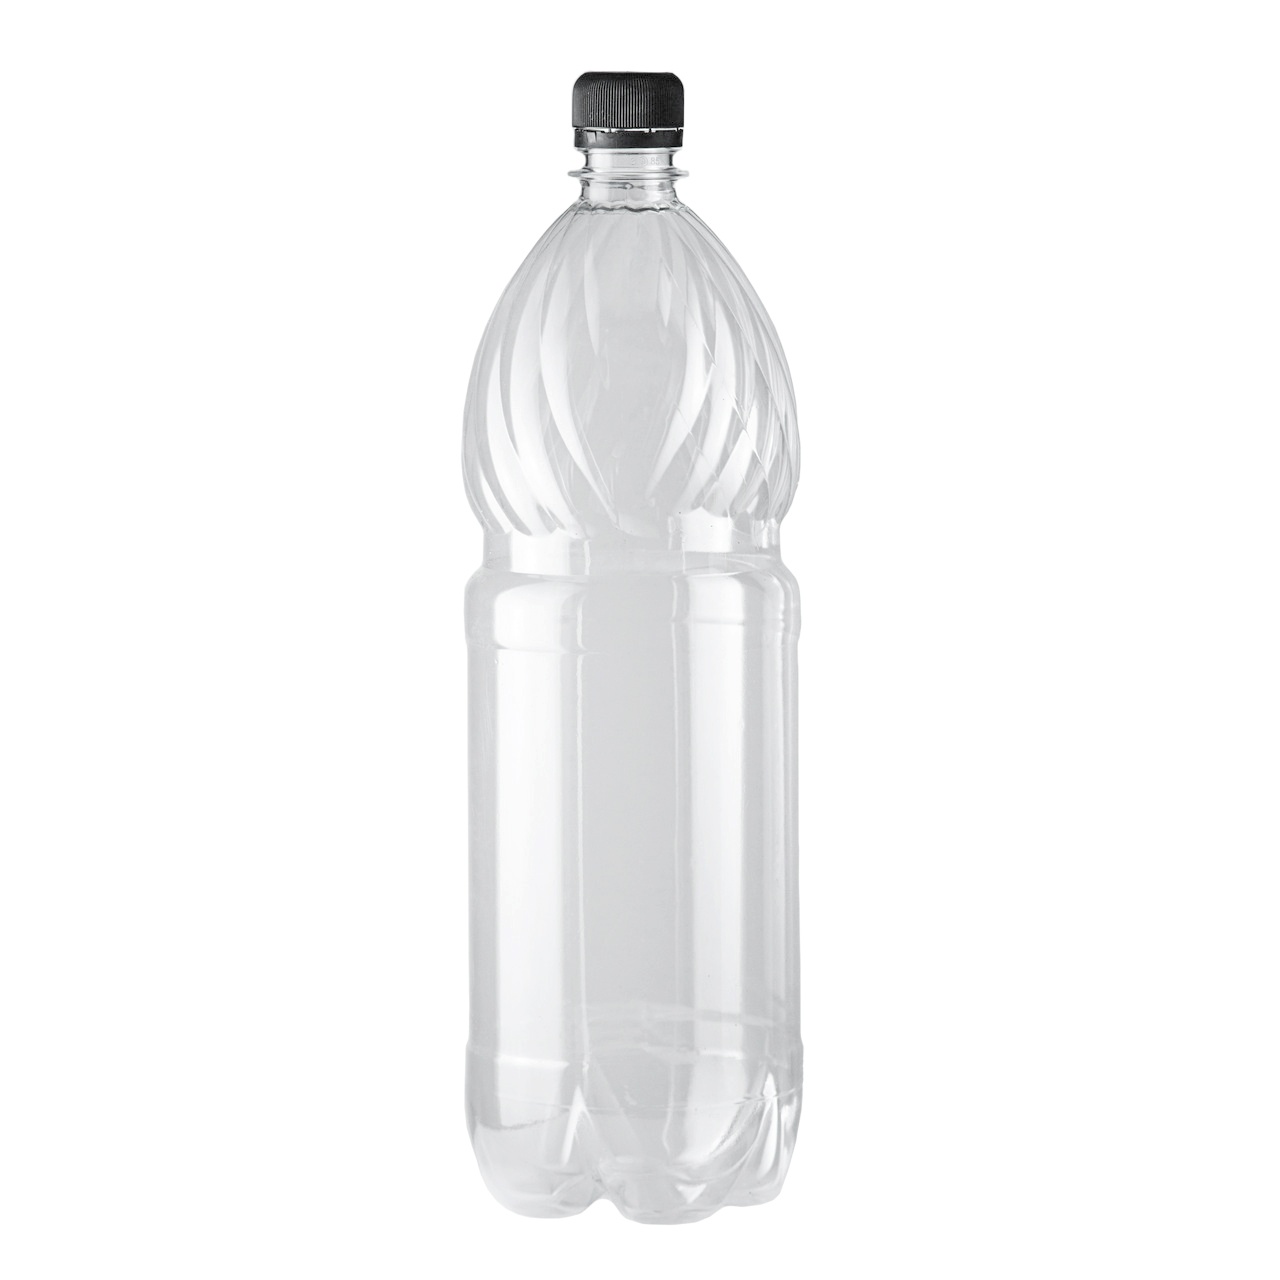 Пэт 1. Бутылка ПЭТ 0,5л (УПК 100шт). Бутылка 1,0 л ПЭТ B-1217. Бутылка ПЭТ 1,0 Л (500 шт) "купол" d-28 мм. Крышка ПЭТ (1-82 горячий).